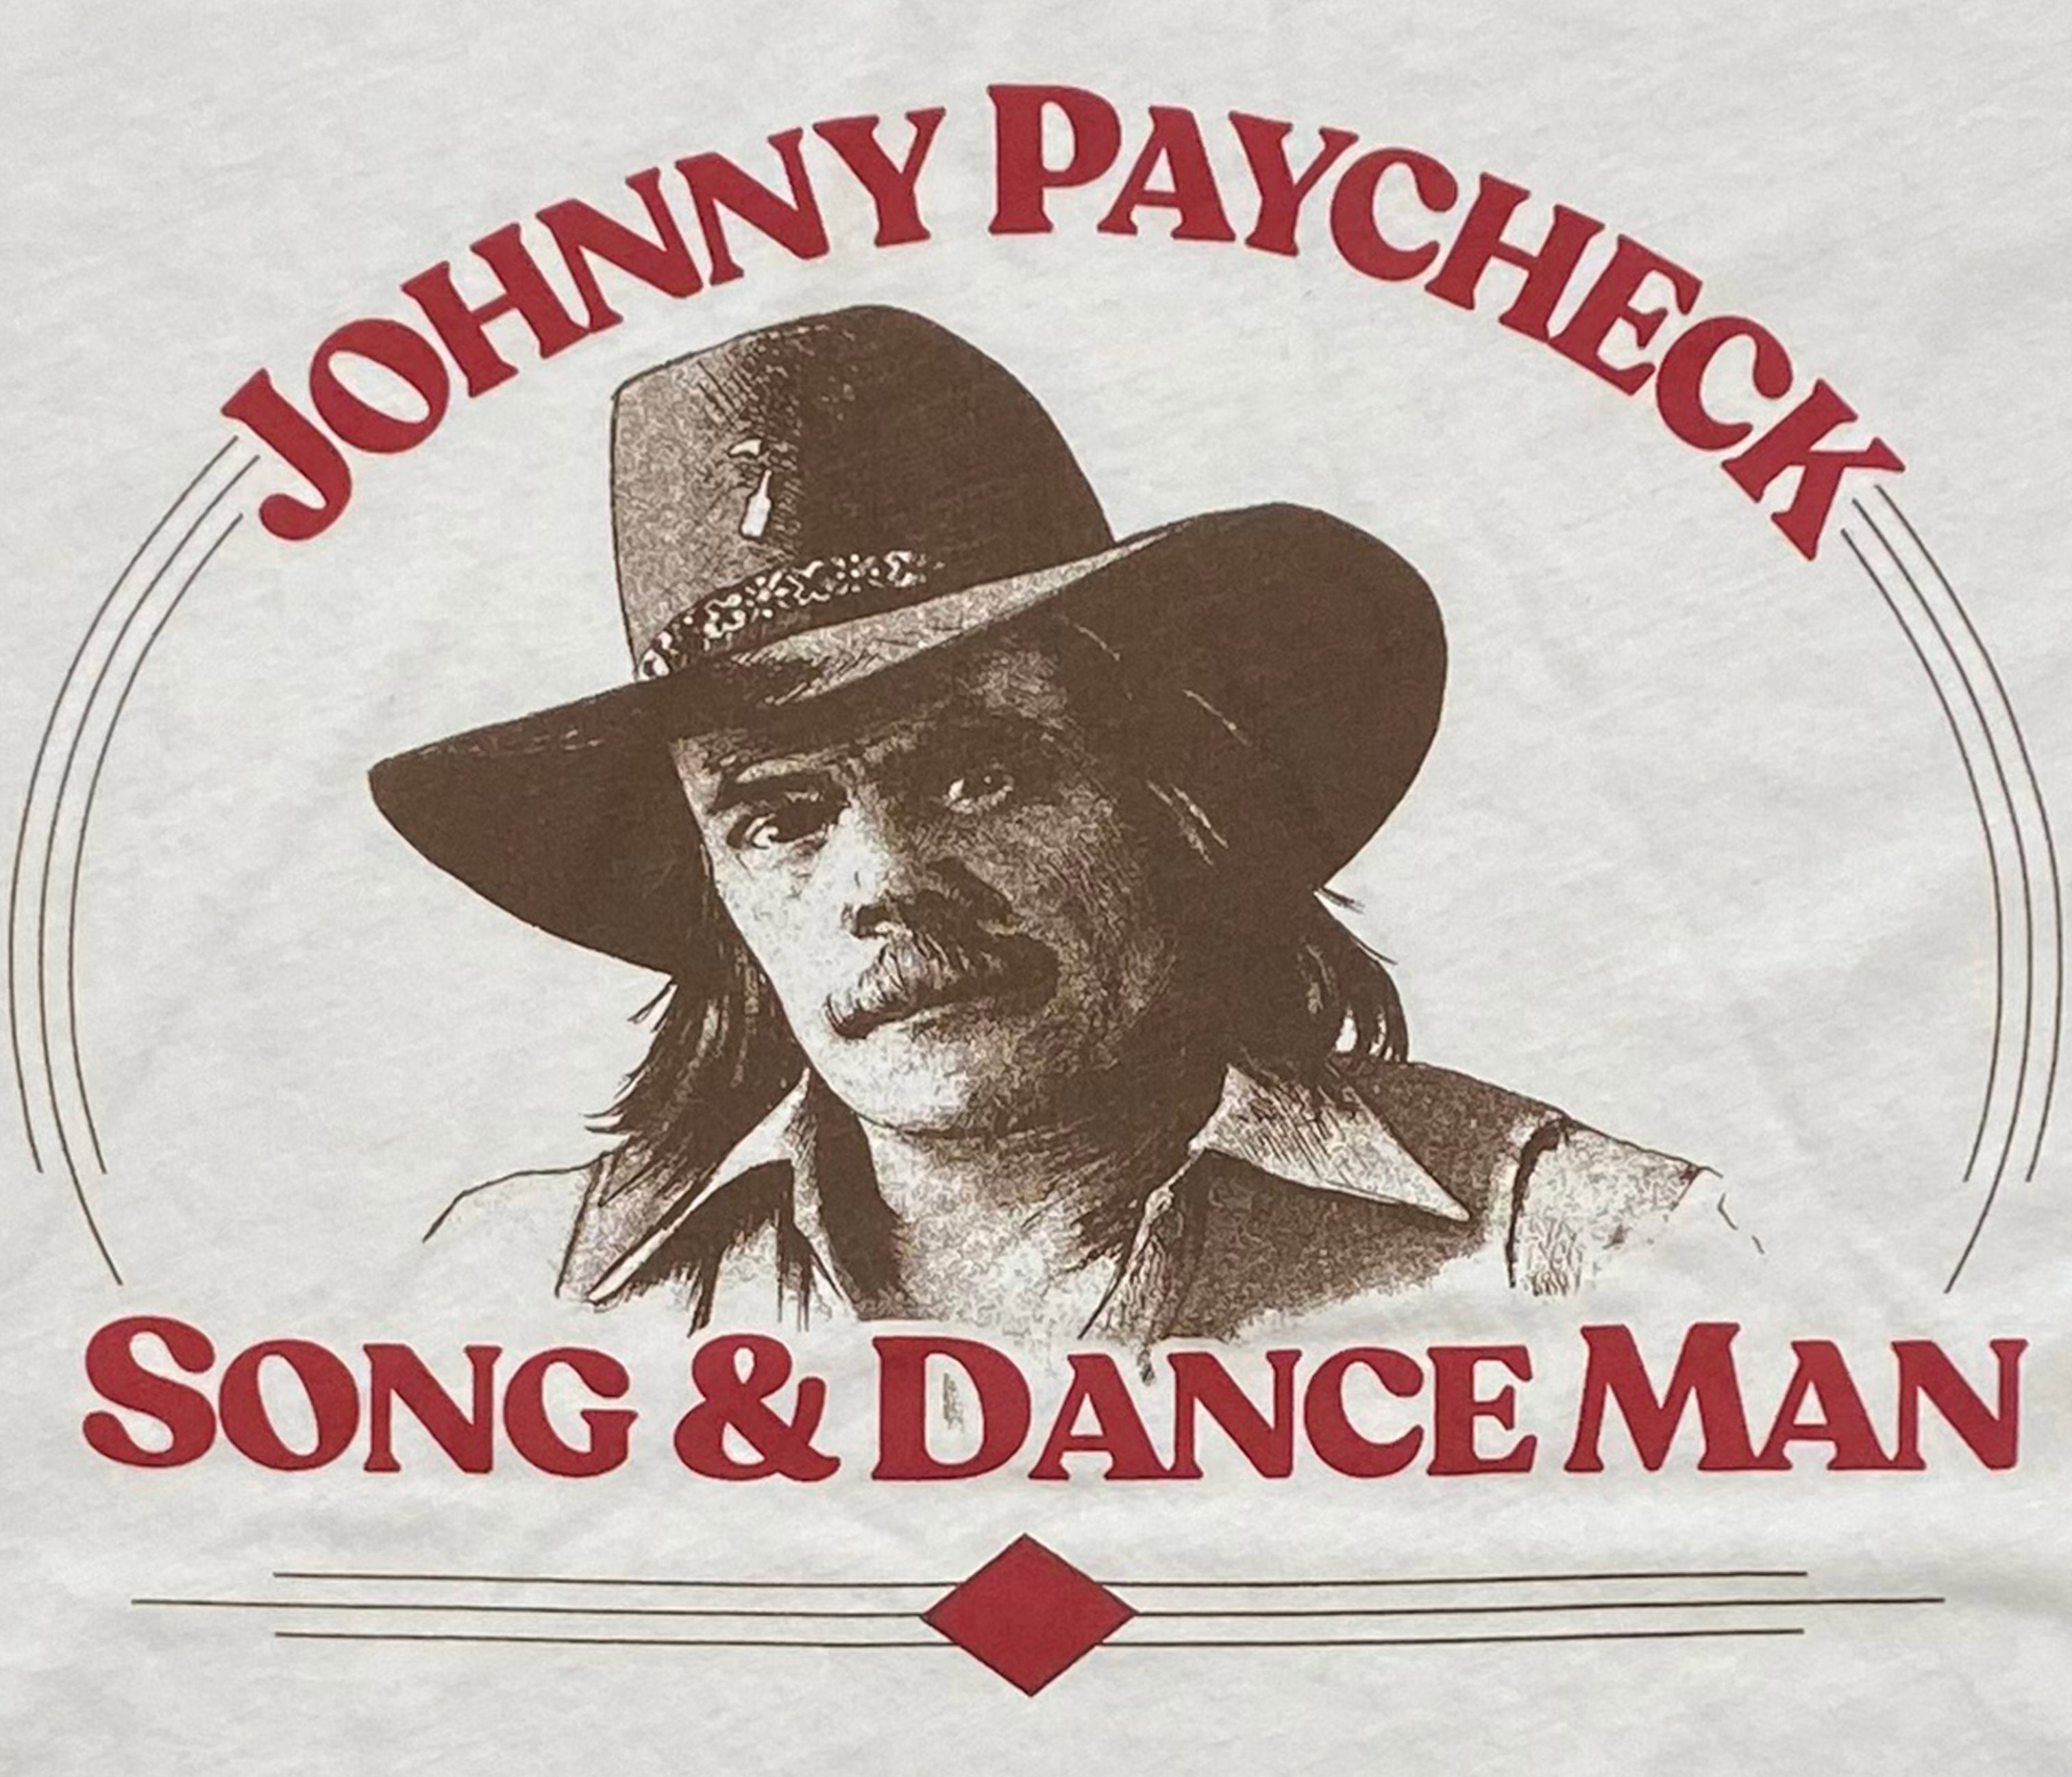 Johnny Paycheck Song & Dance Man Cut Off Crop Tee